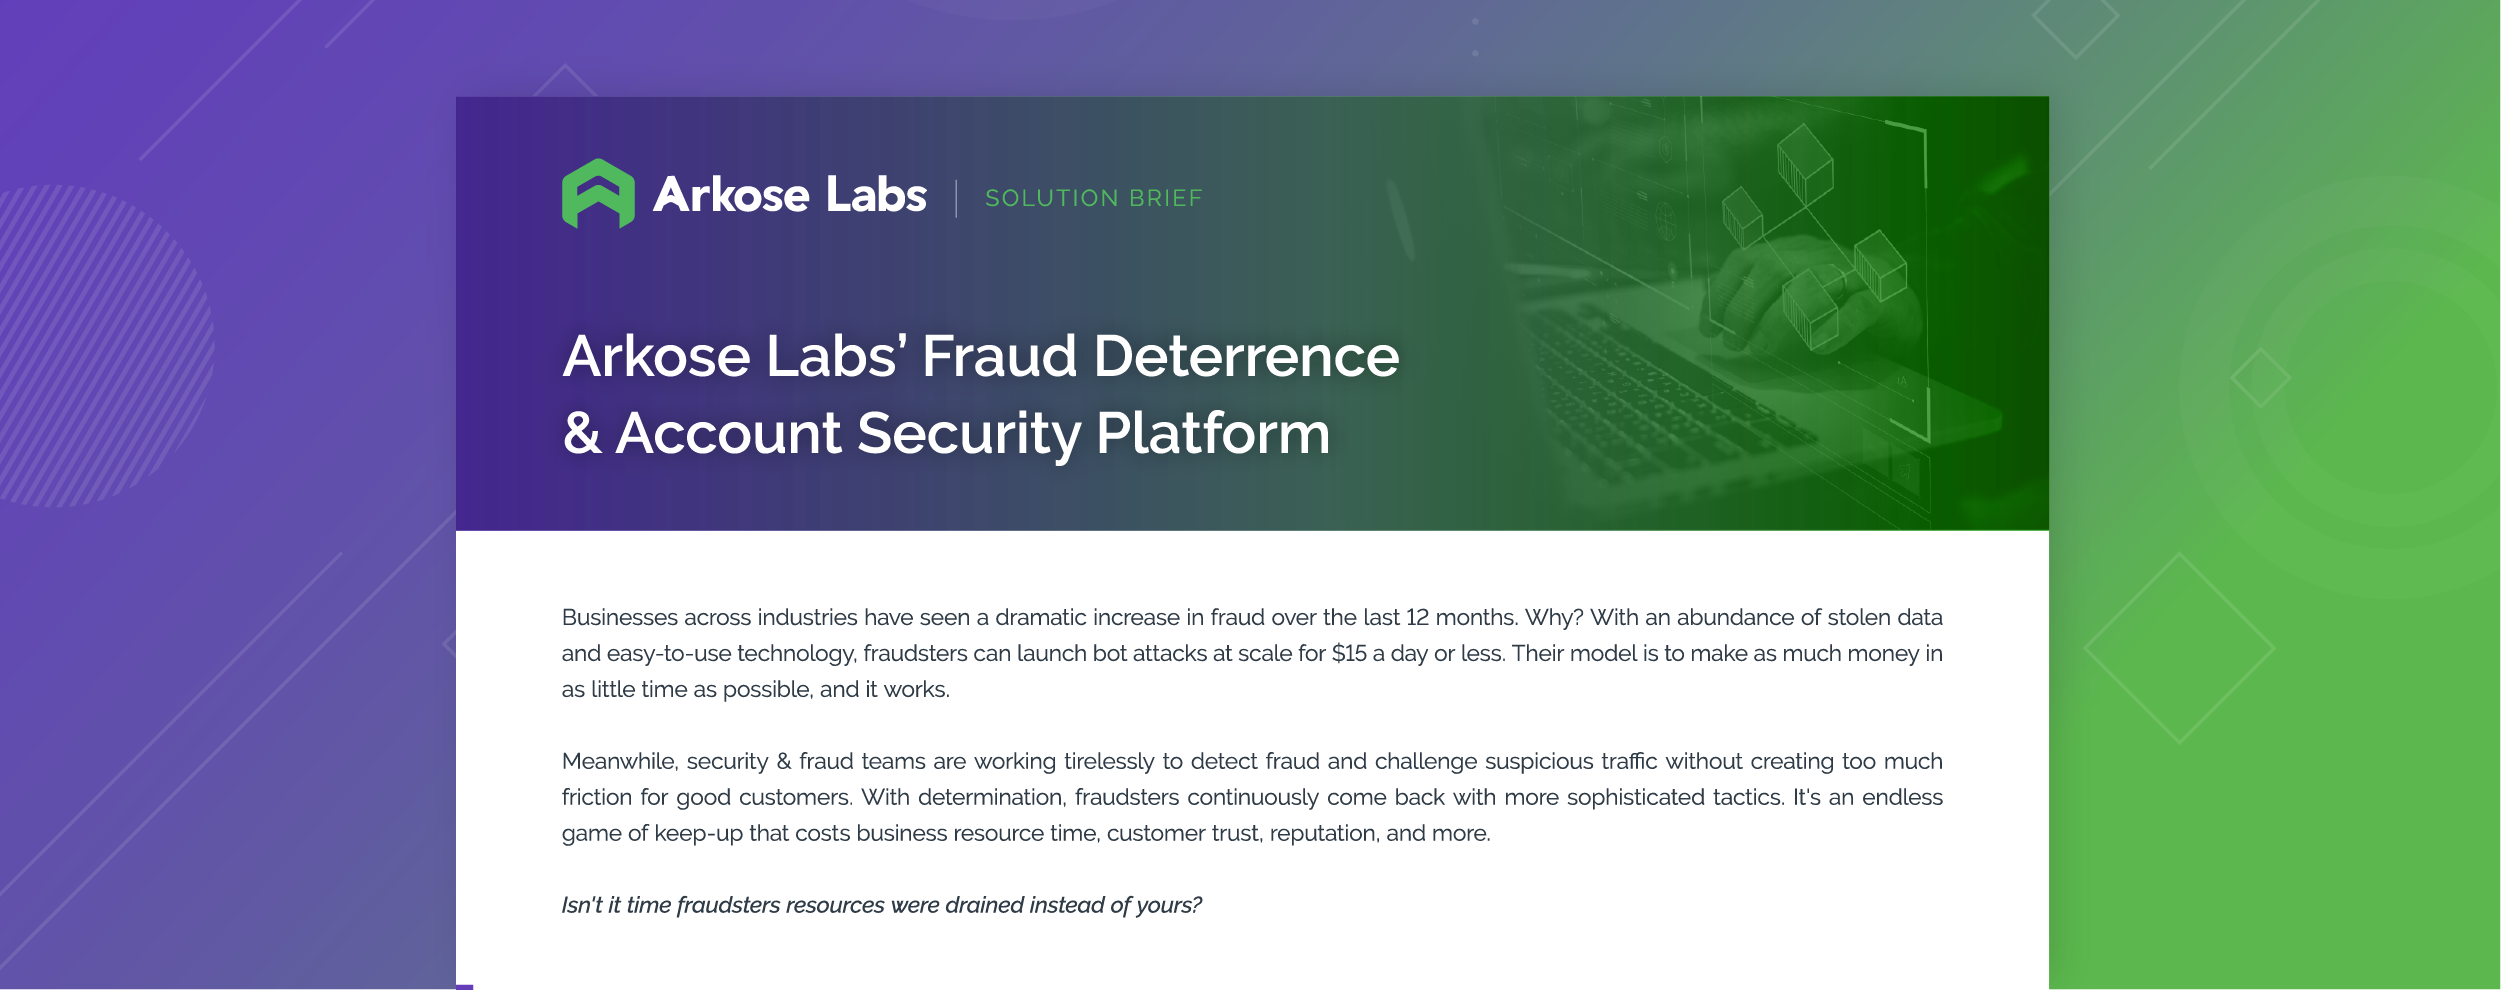 Arkose Labs Account Security Platform solution brief